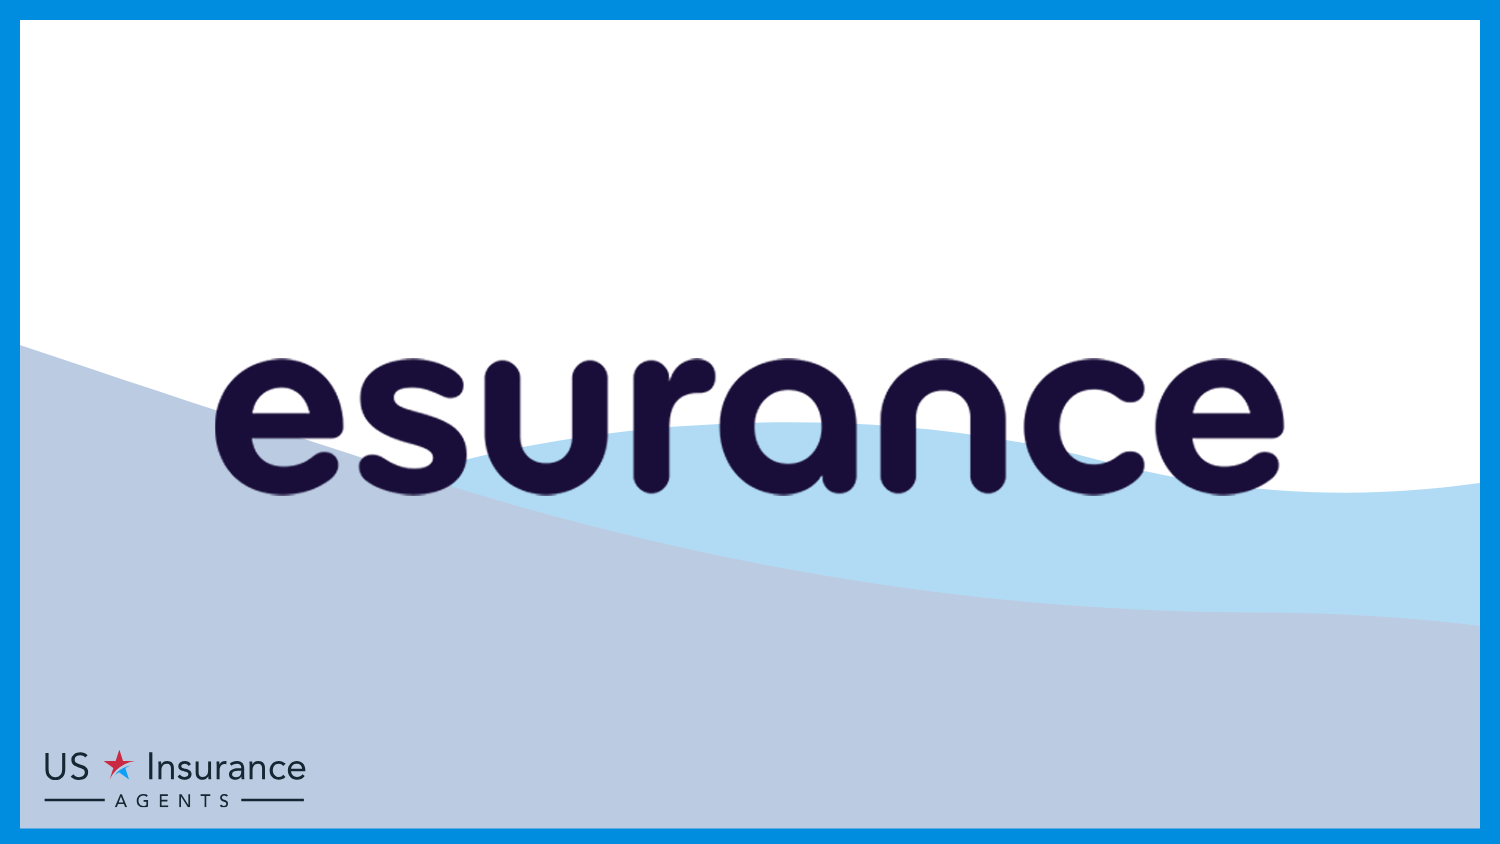 Best Car Insurance for Engineers: Esurance